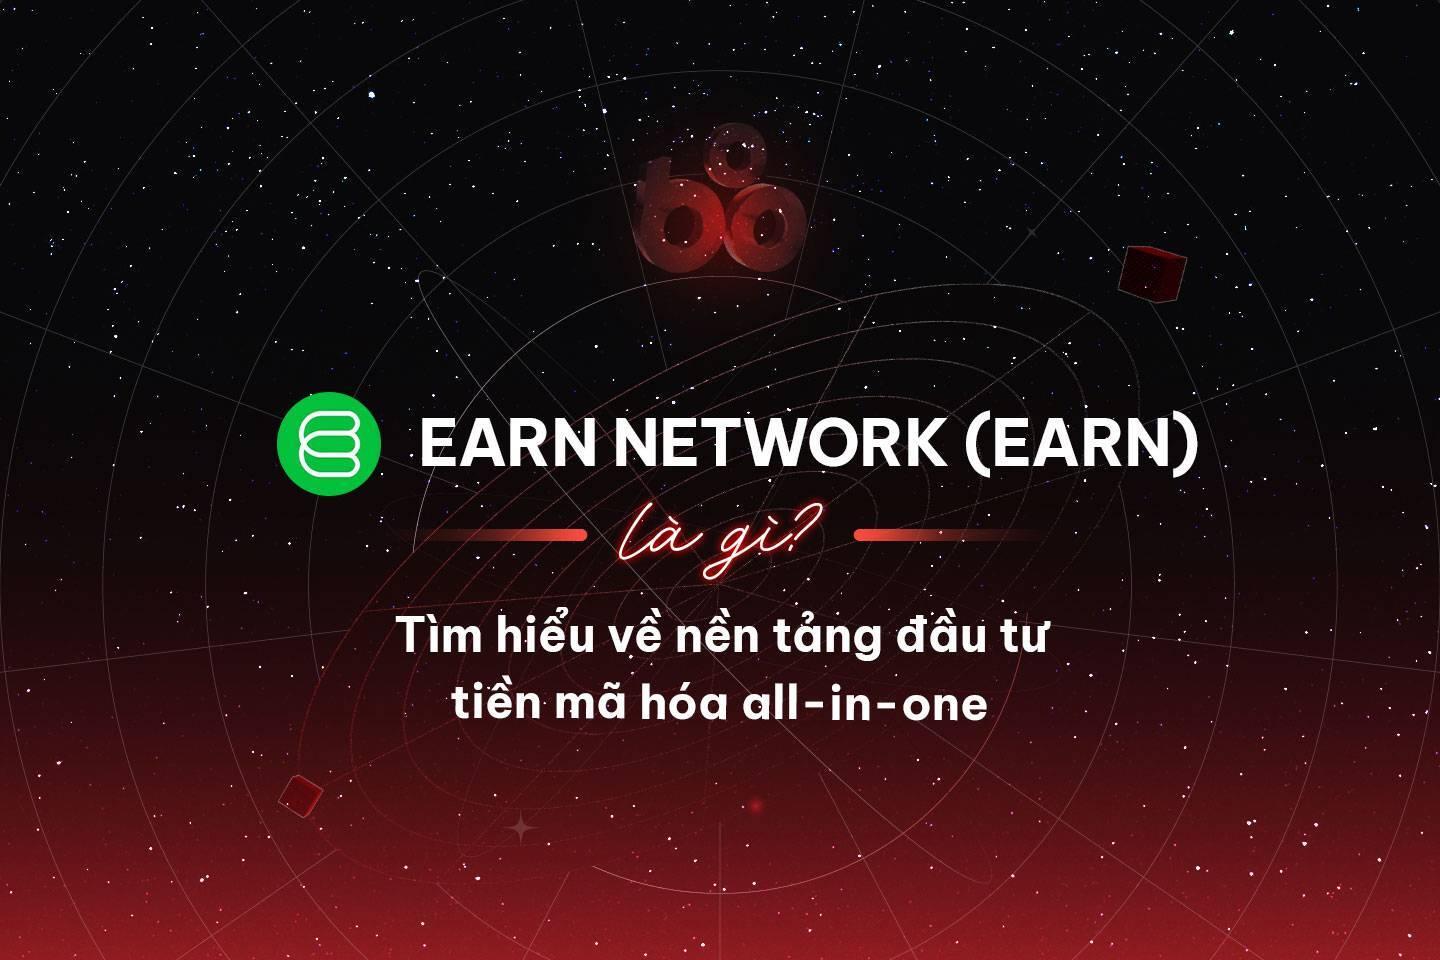 earn-network-earn-la-gi-tim-hieu-ve-nen-tang-dau-tu-tien-ma-hoa-all-in-one